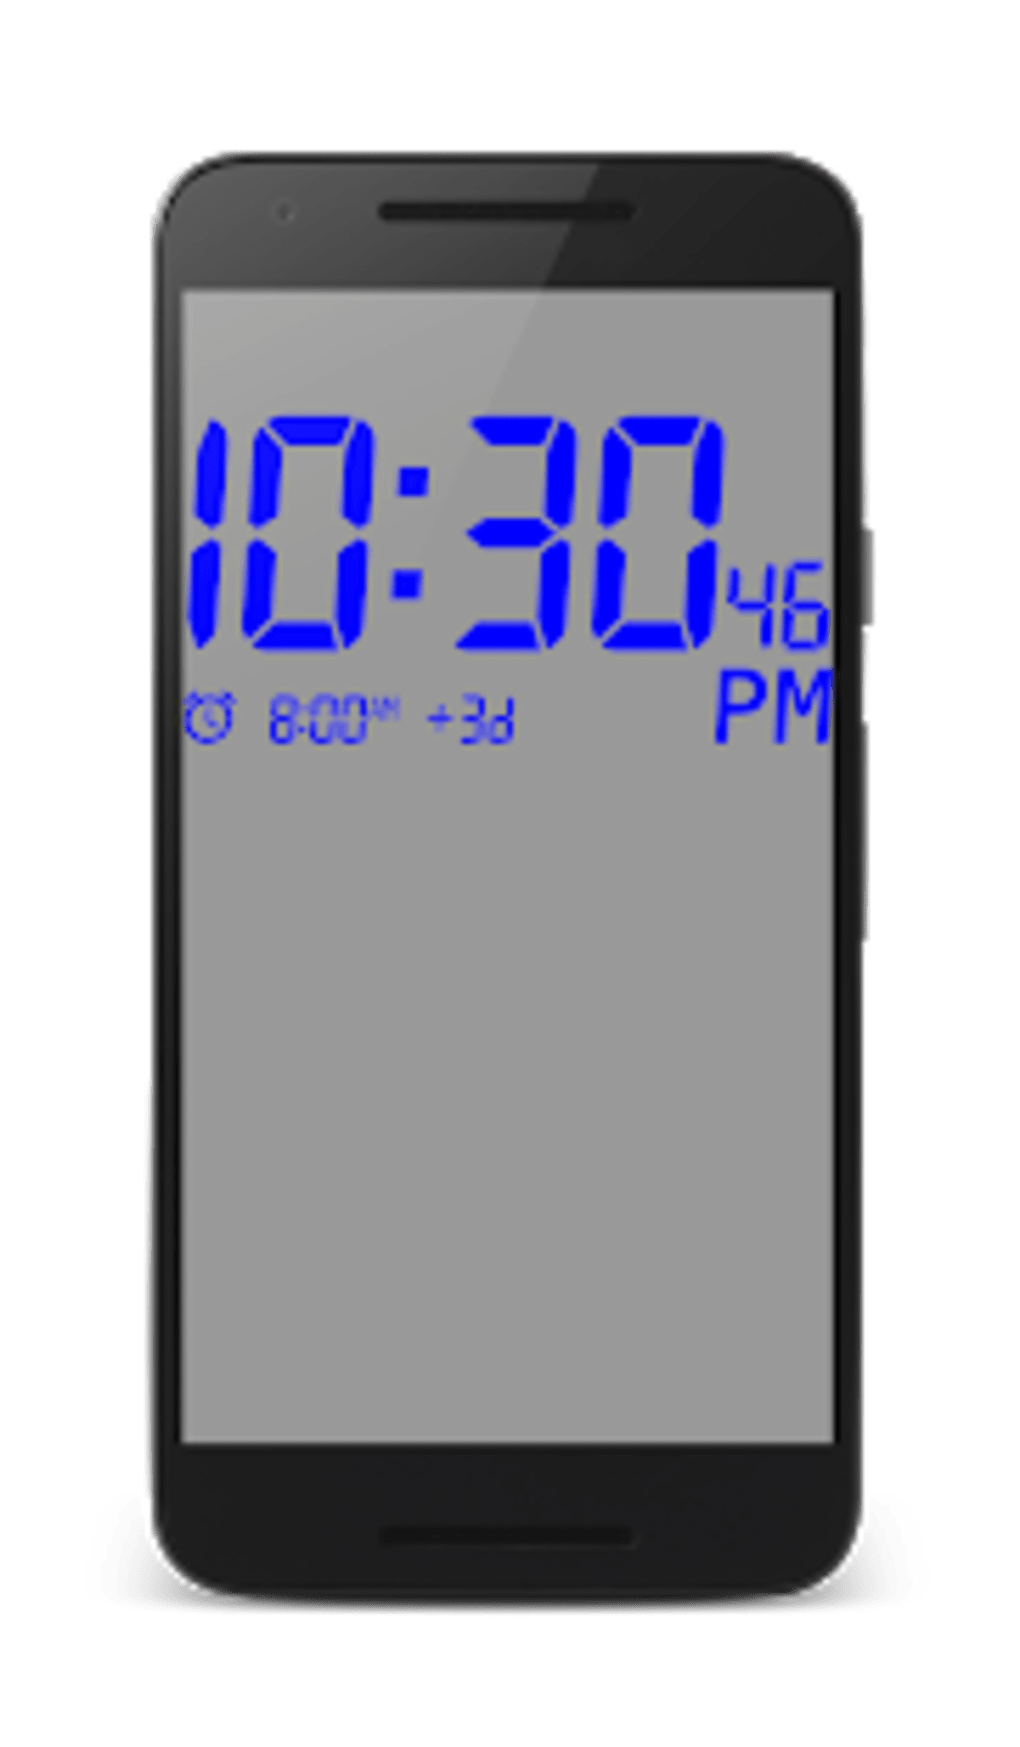 Big Digital Clock APK for Android - Download